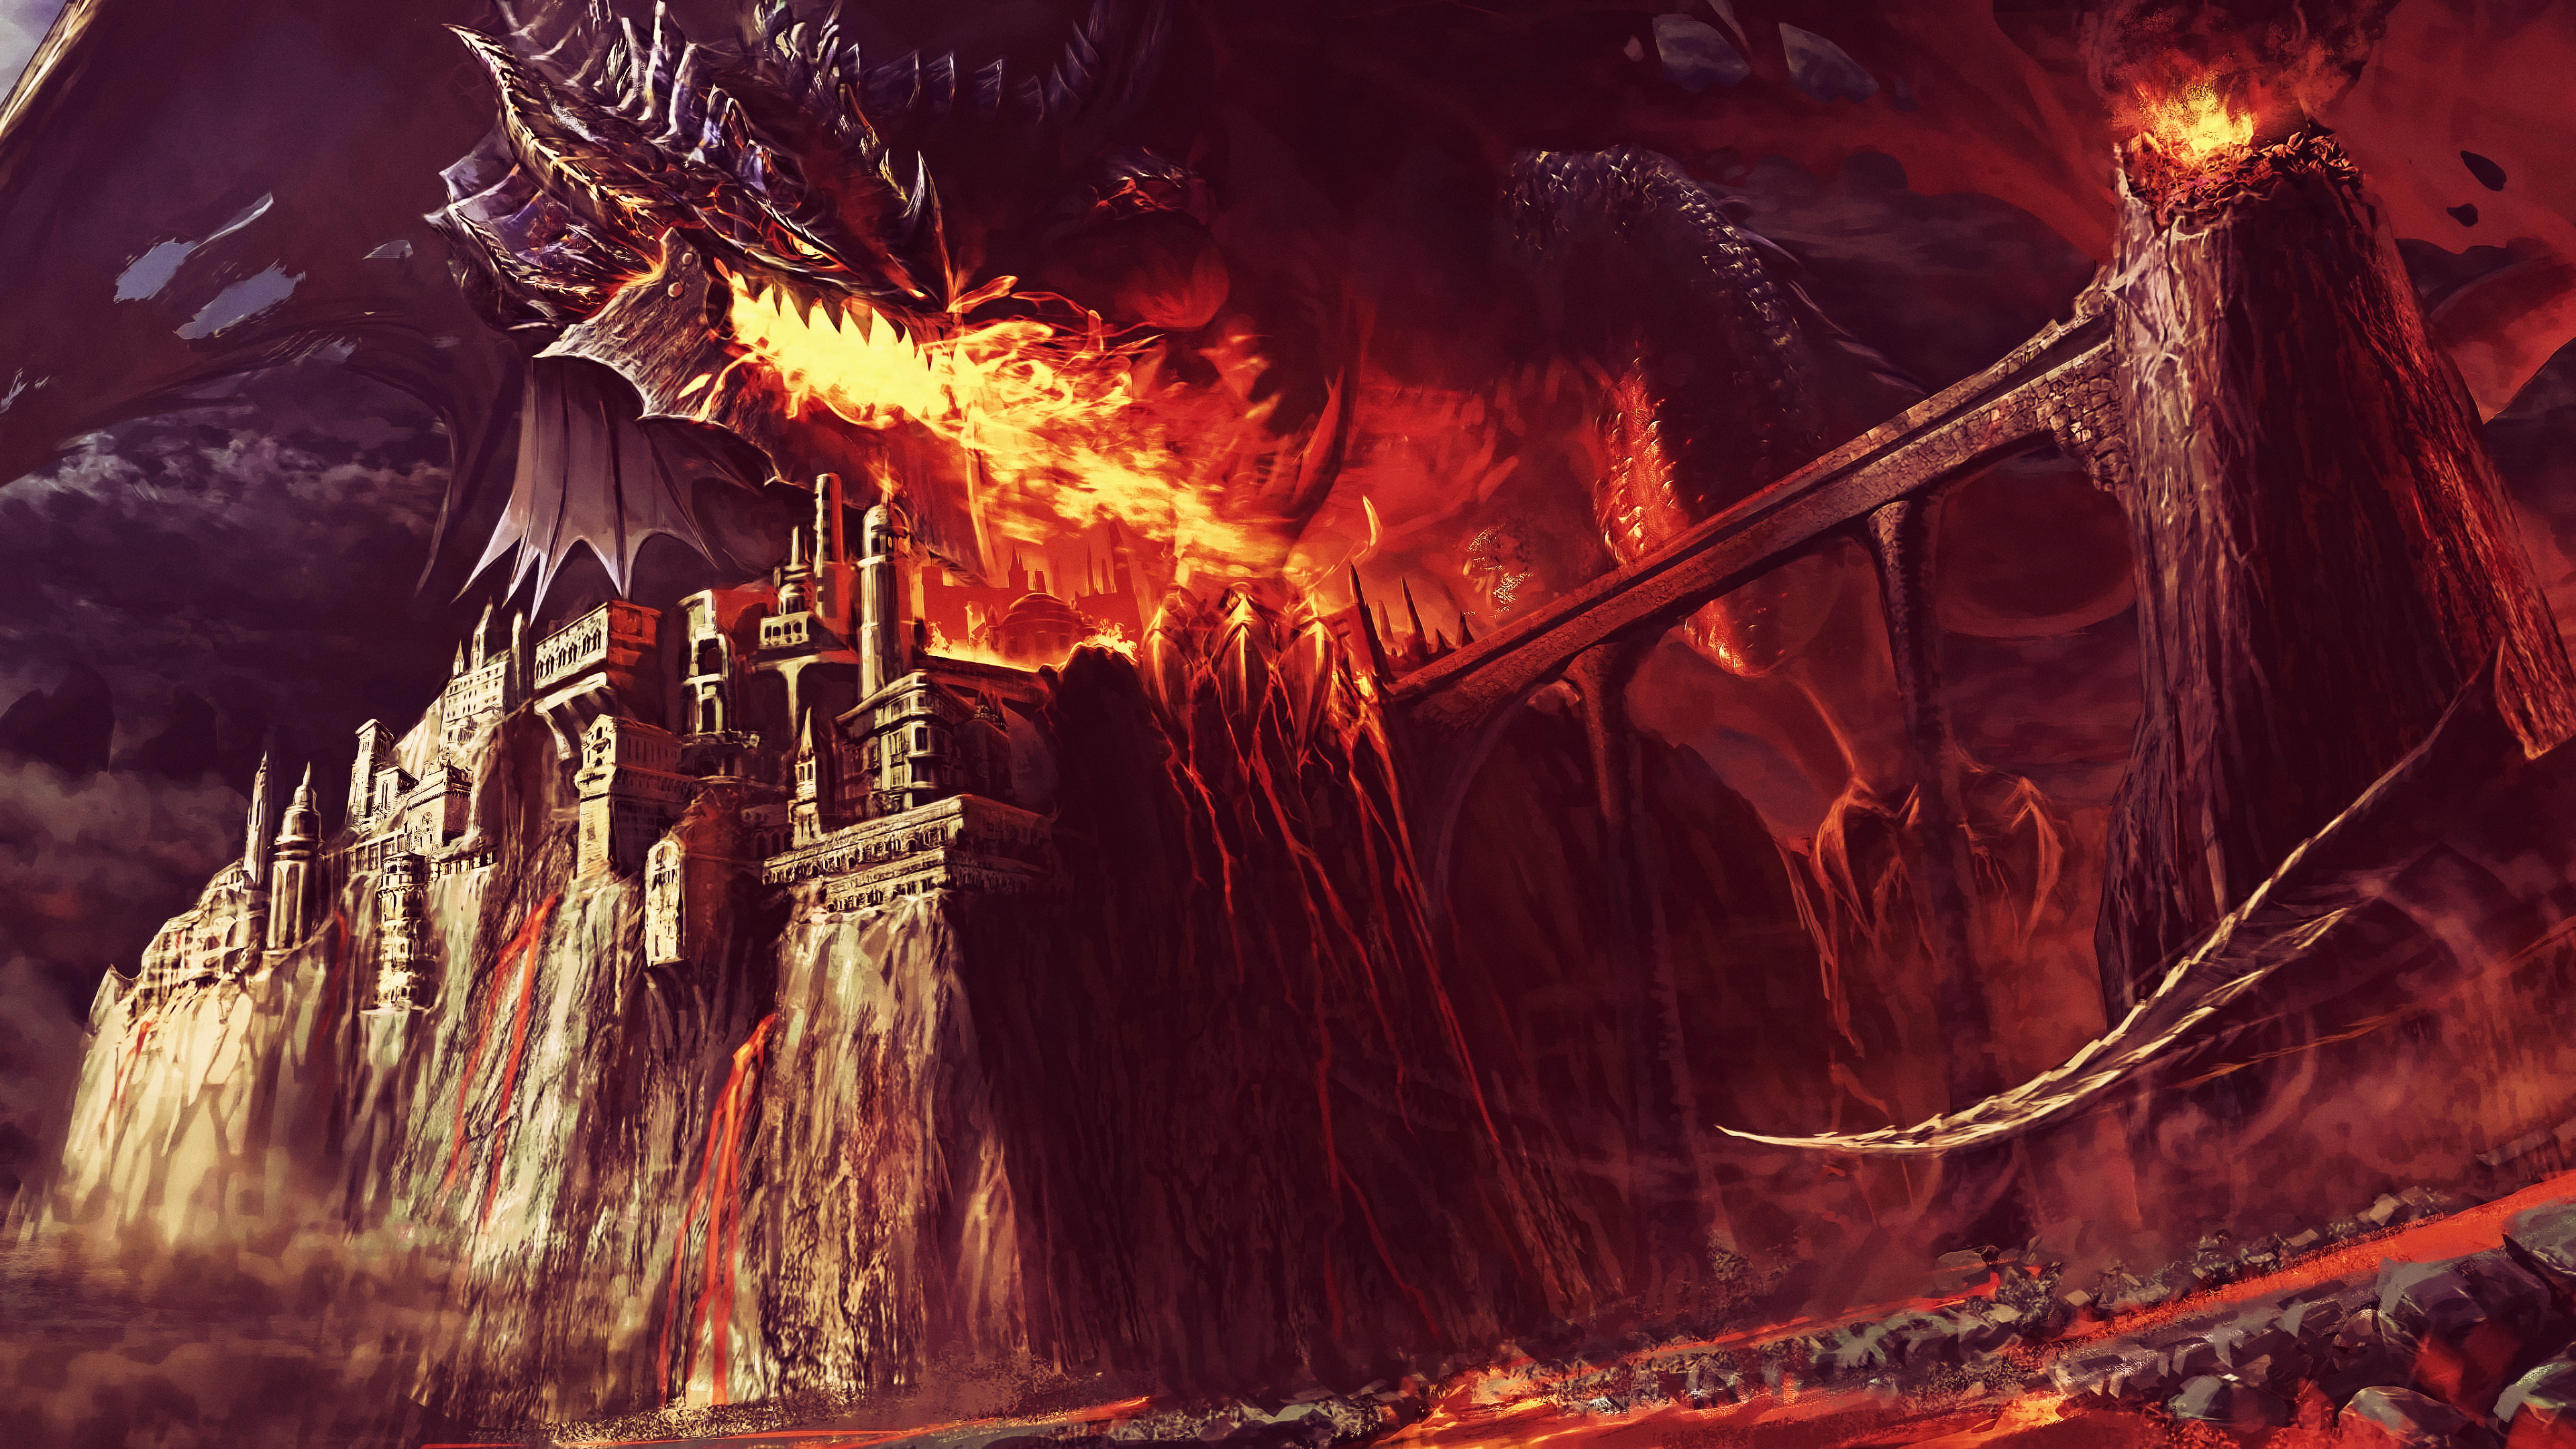 General 3840x2160 fantasy art artwork fan art dark dragon creature mythology fire World of Warcraft: Cataclysm PC gaming video games Deathwing